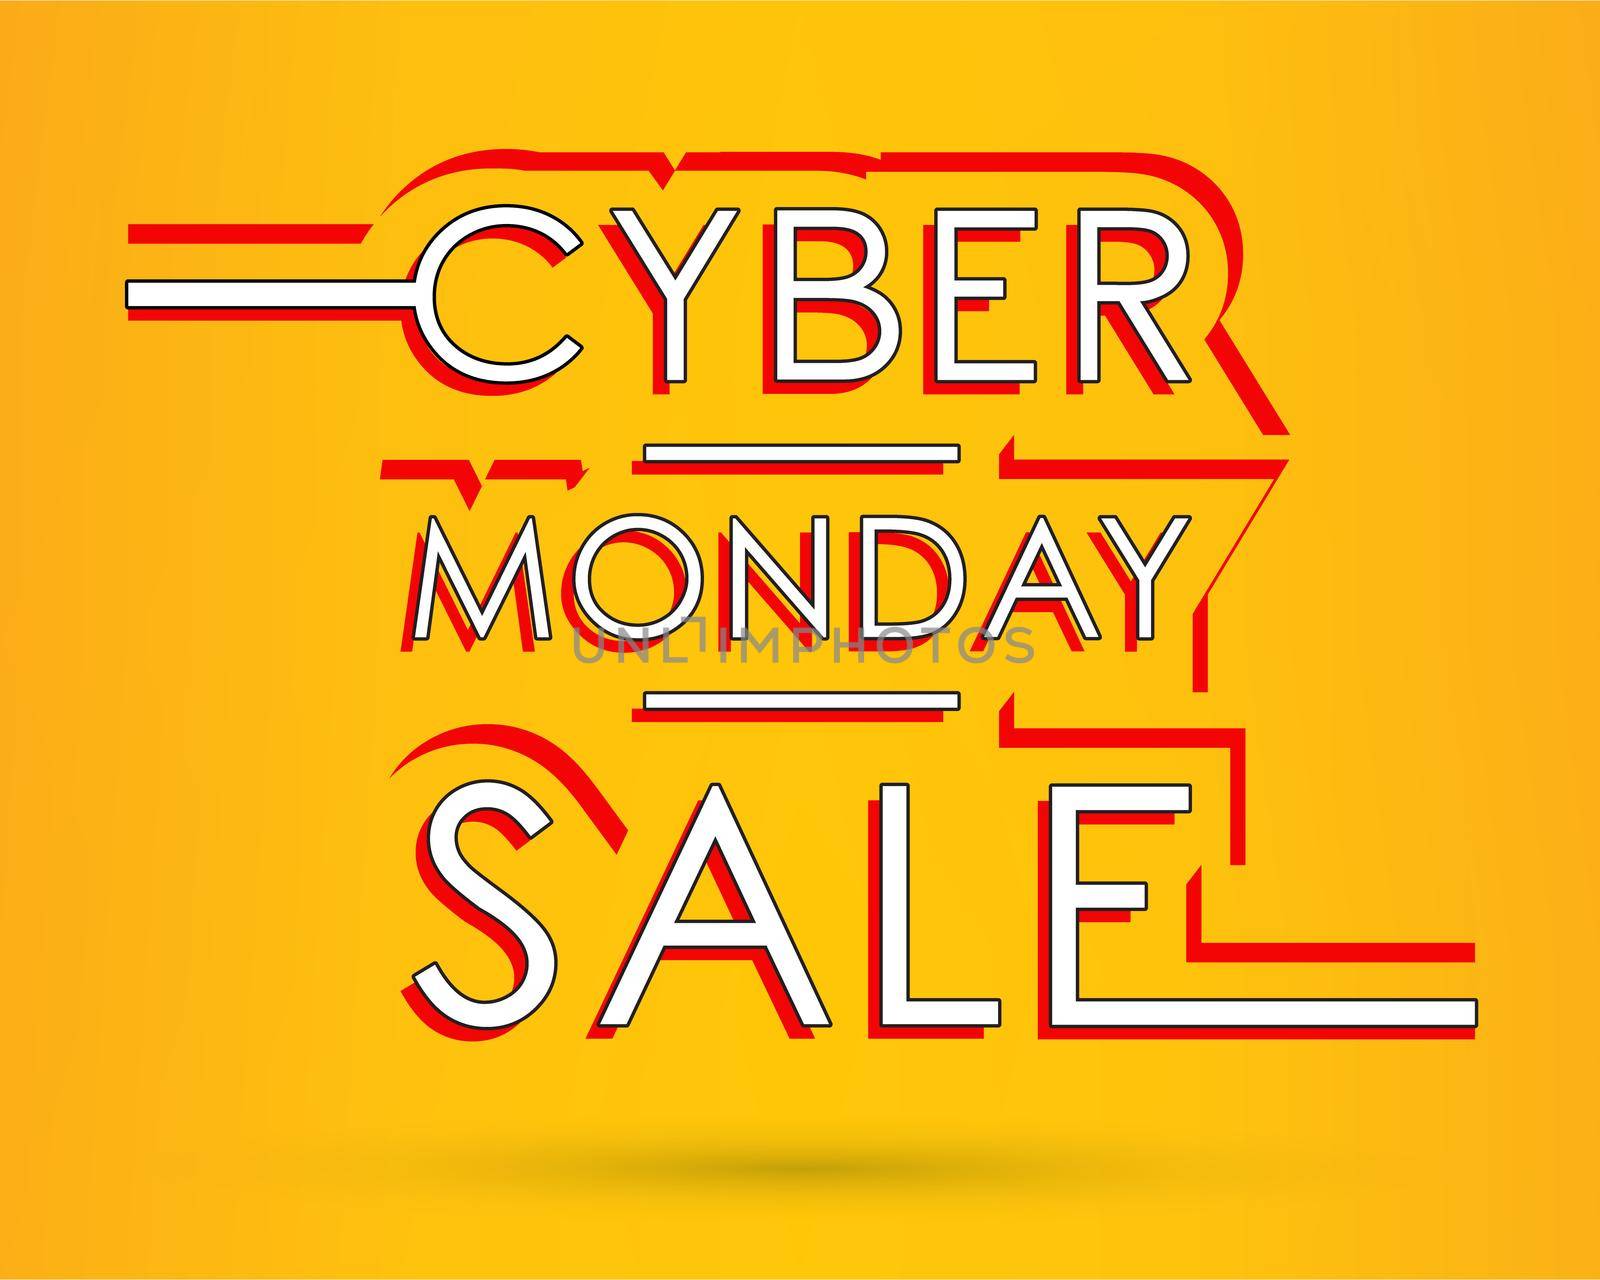 Cyber Monday Sale design poster. Vector illustration.